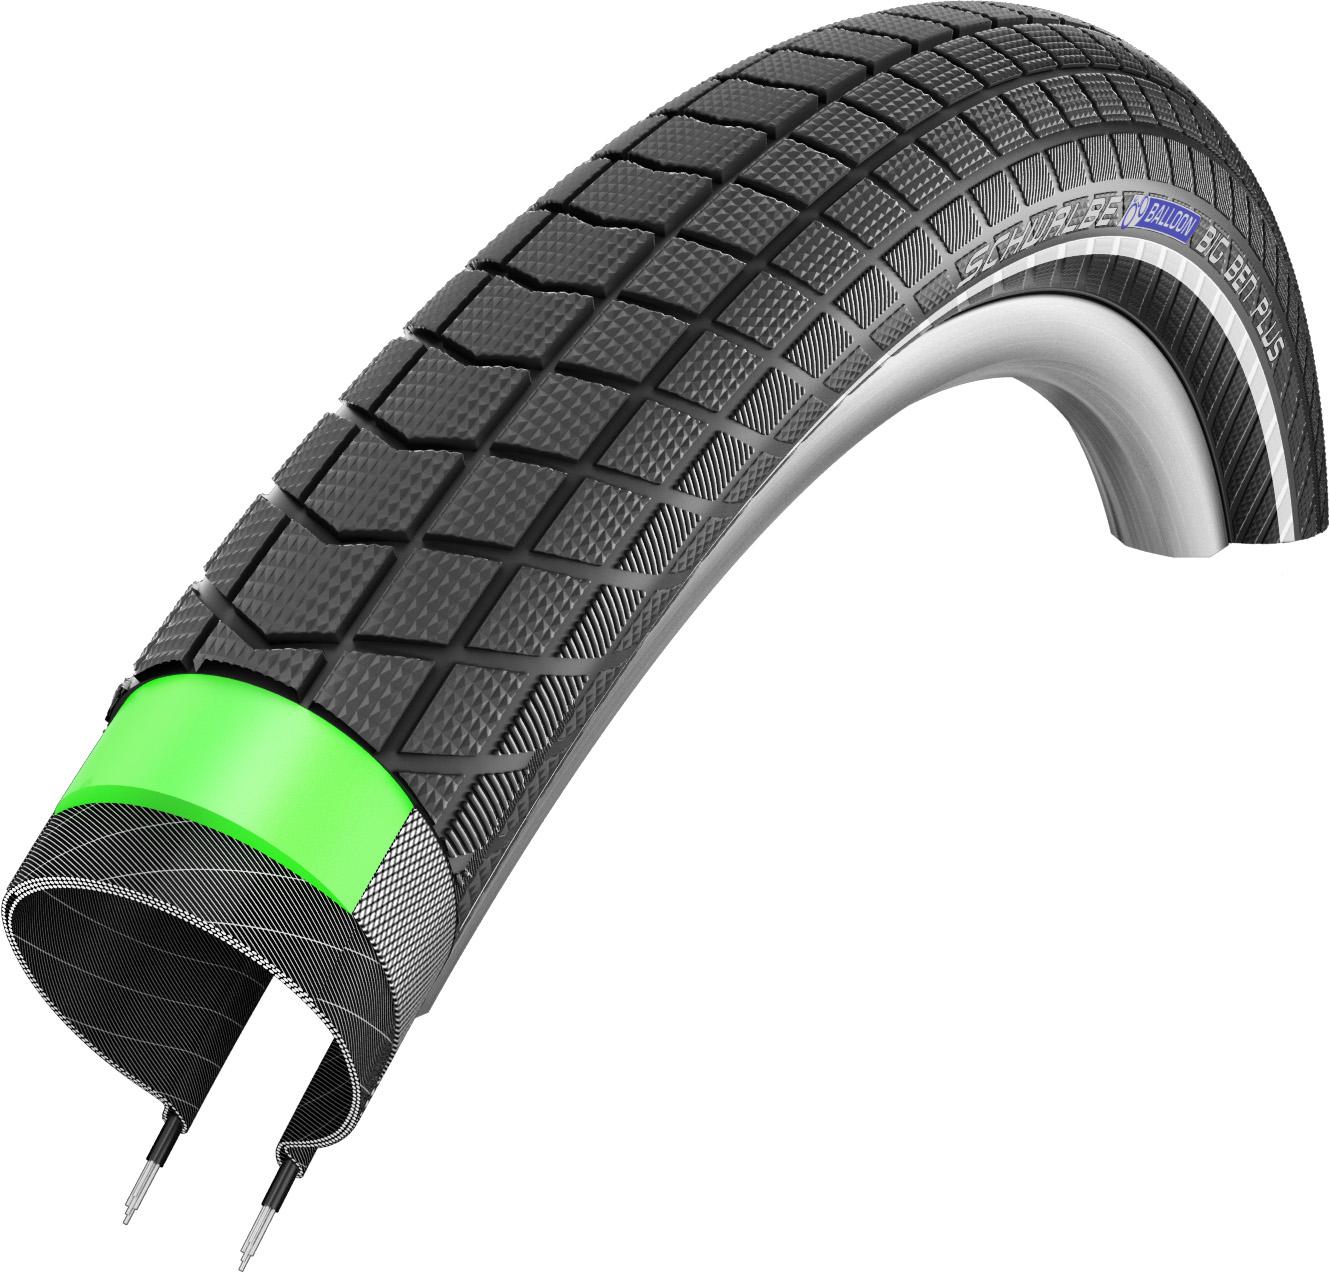 Schwalbe Big Ben Plus Mtb Tyre - Greenguard - Black/reflex